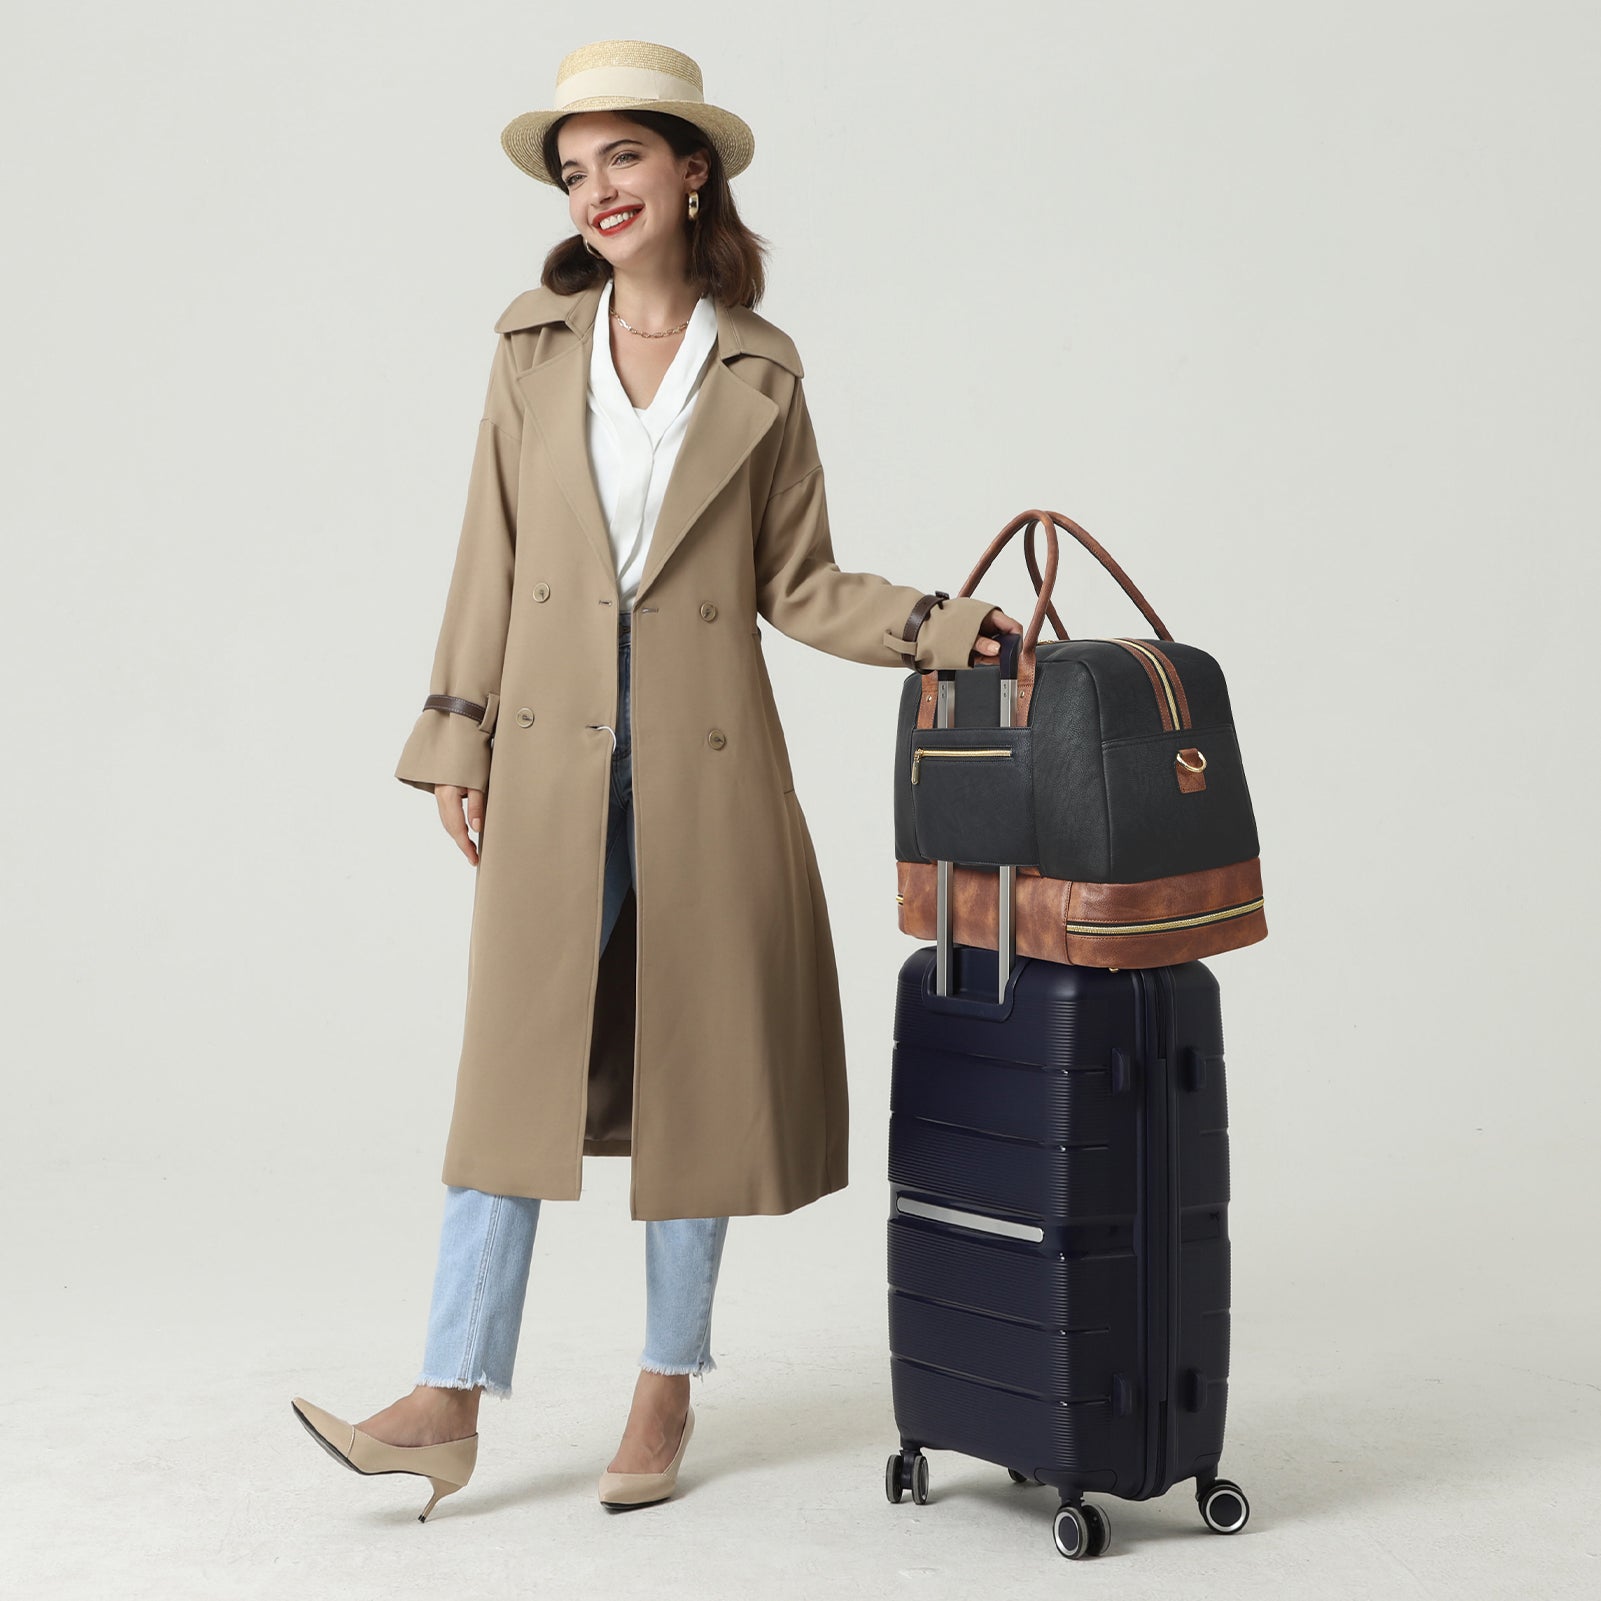 Lady Large Handbag Travel Zip Bag Overnight Weekend Women Holdall Hand  luggage | eBay